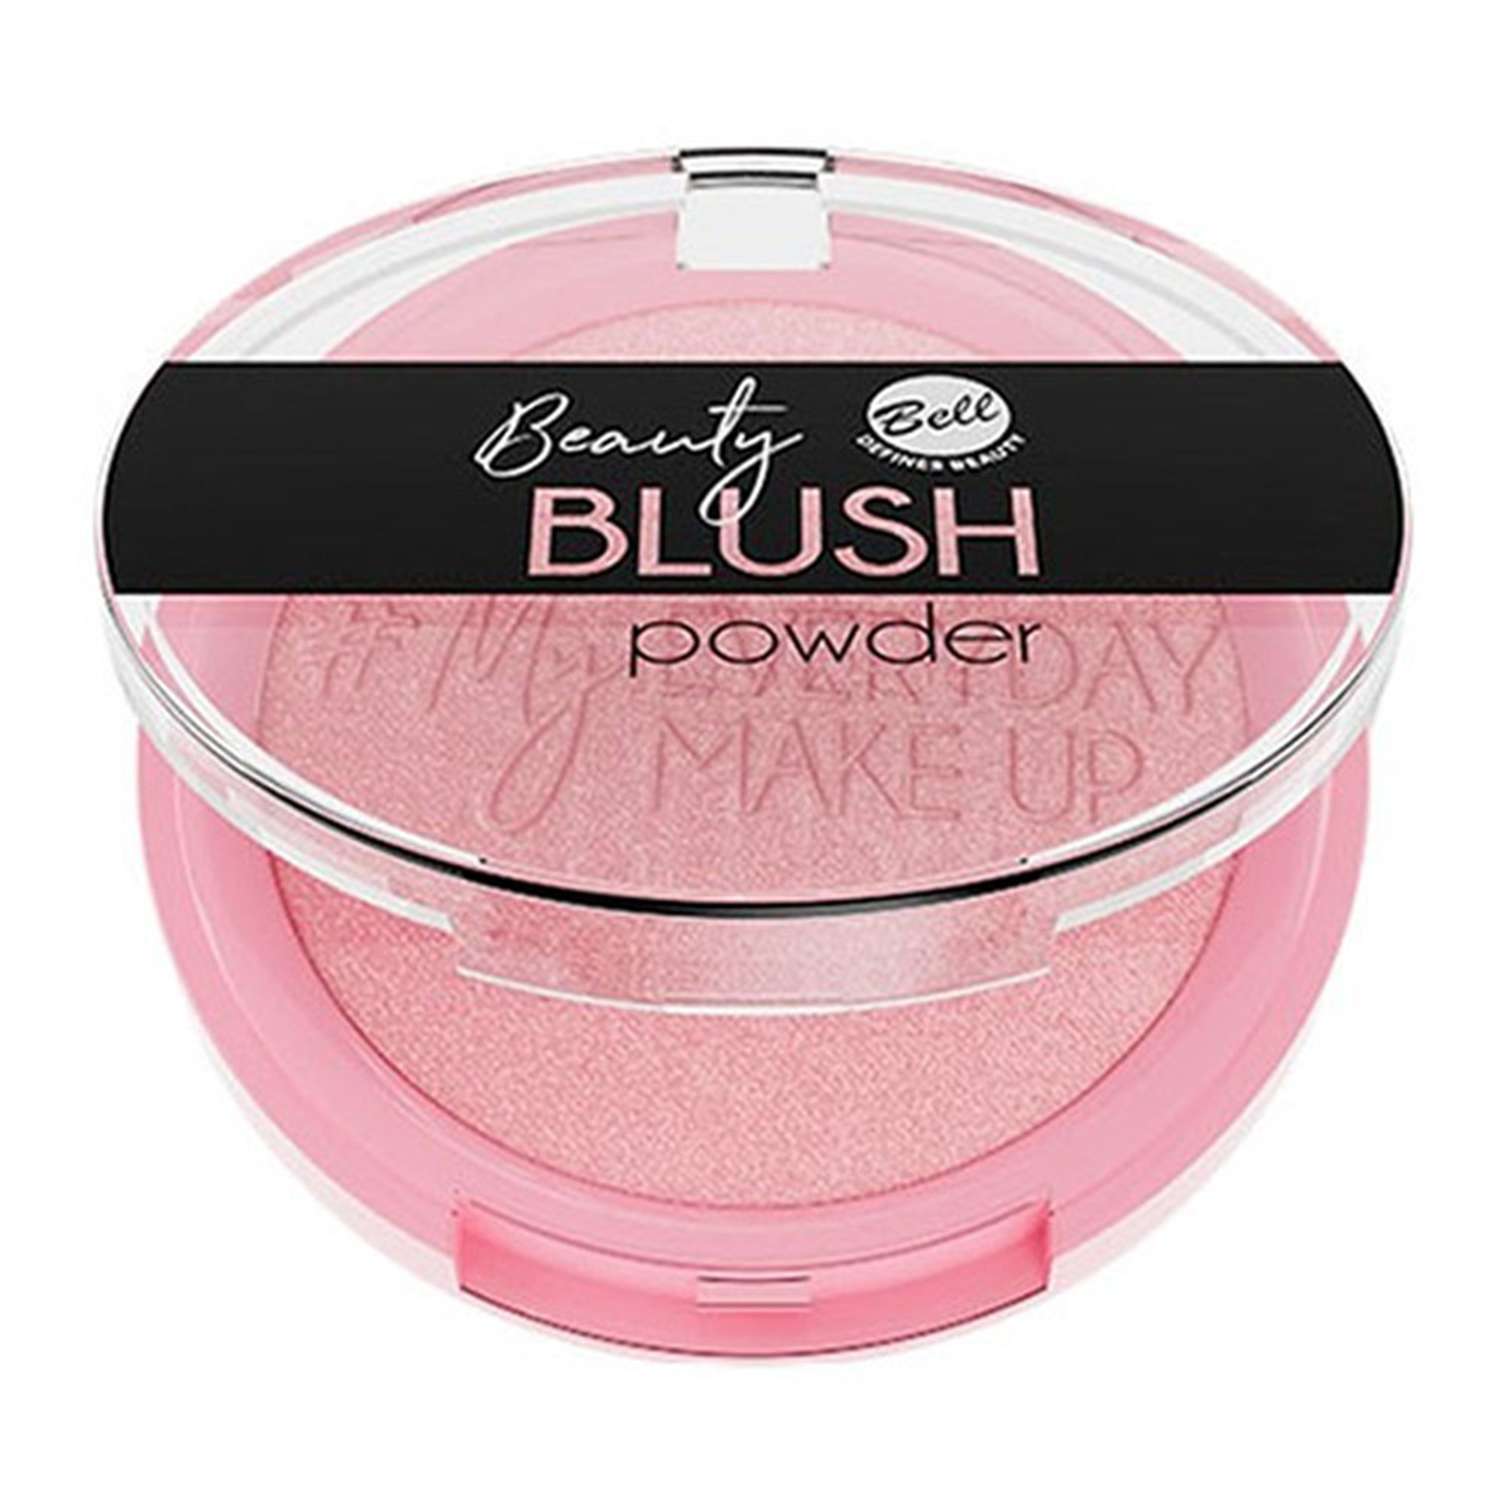 Румяна Bell компактные Beauty blush powder тон 01 - фото 4